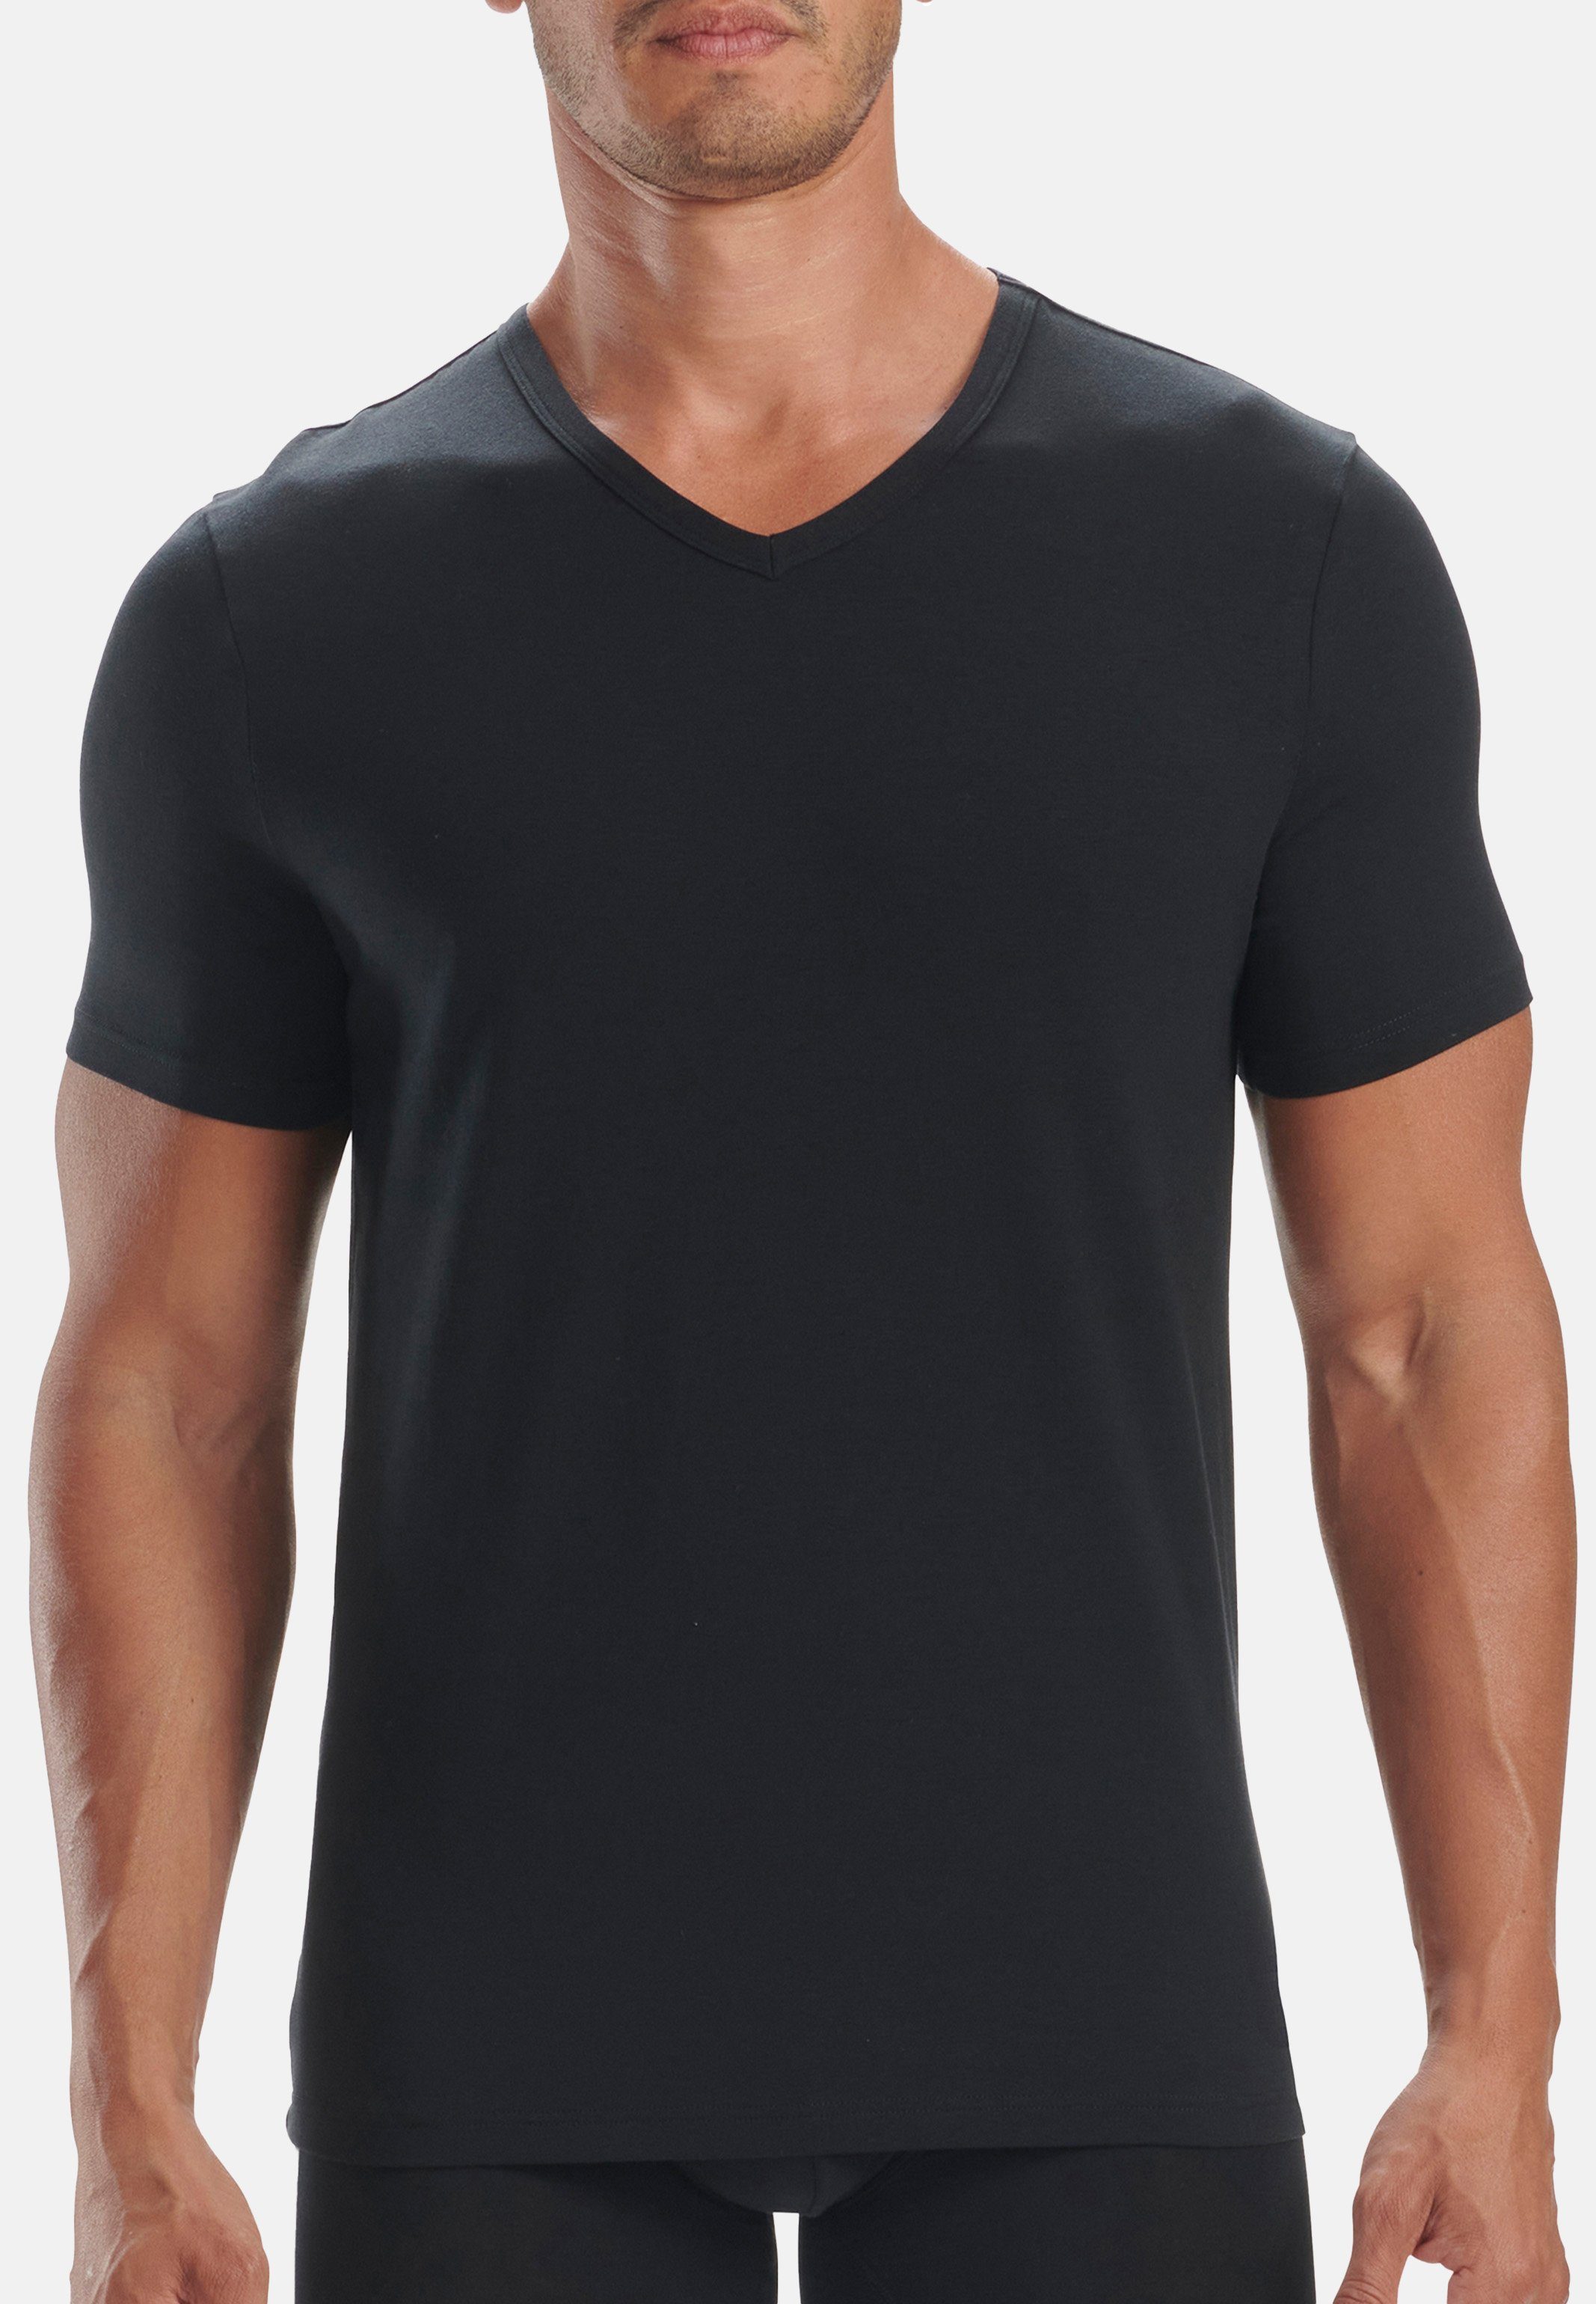 / adidas Unterhemd Legere Cotton Unterhemd (Spar-Set, - Passform 6-St) Schwarz 6er Active Pack Shirt Baumwolle Core - Kurzarm Sportswear